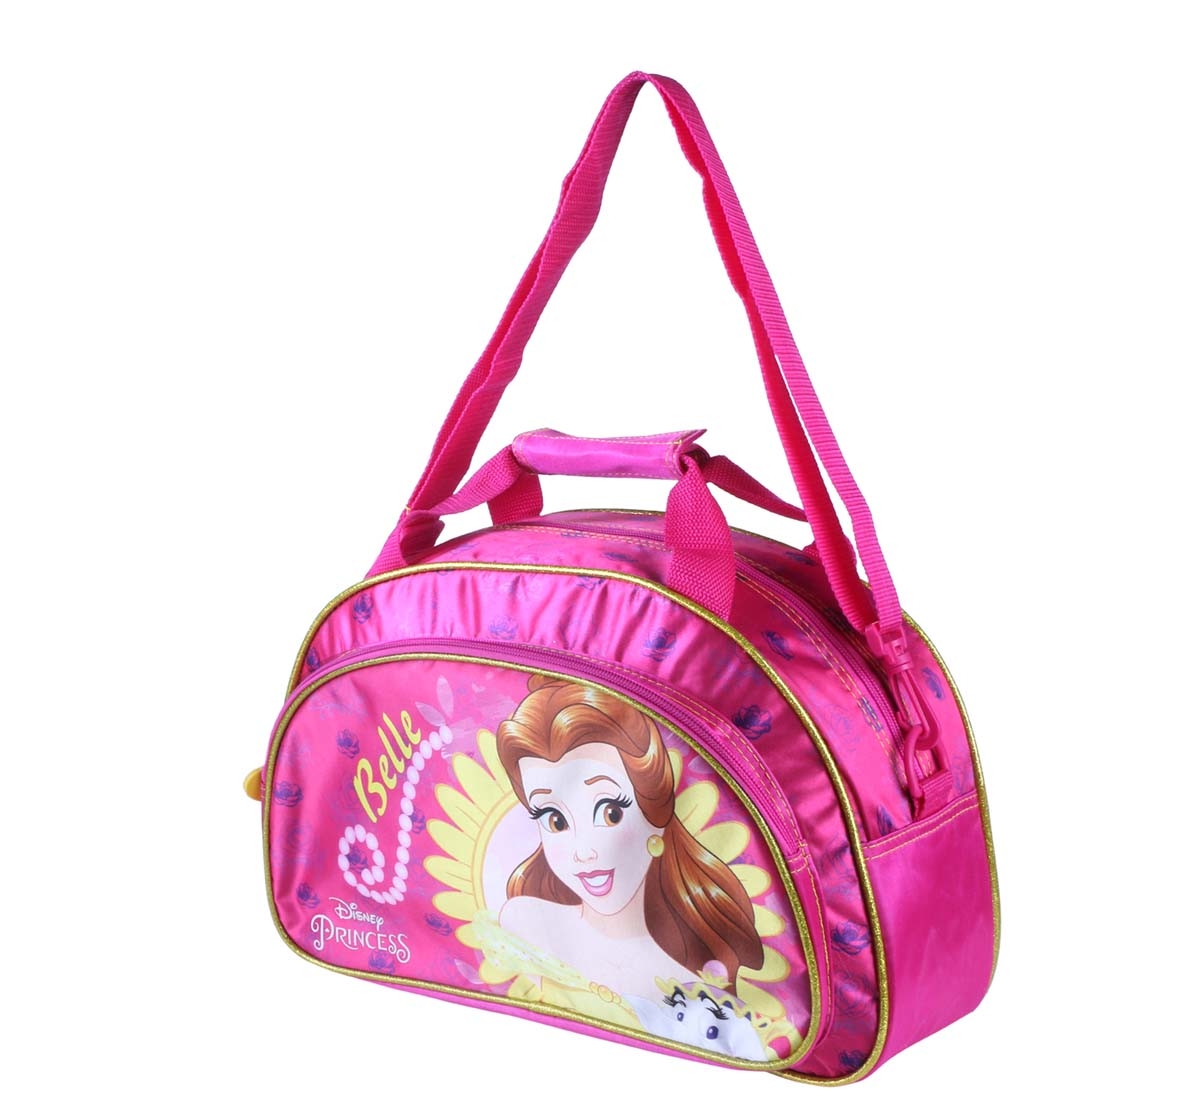 DISNEY | Disney Princess - Pink Fashion Carry Bags for Girls age 3Y+  1